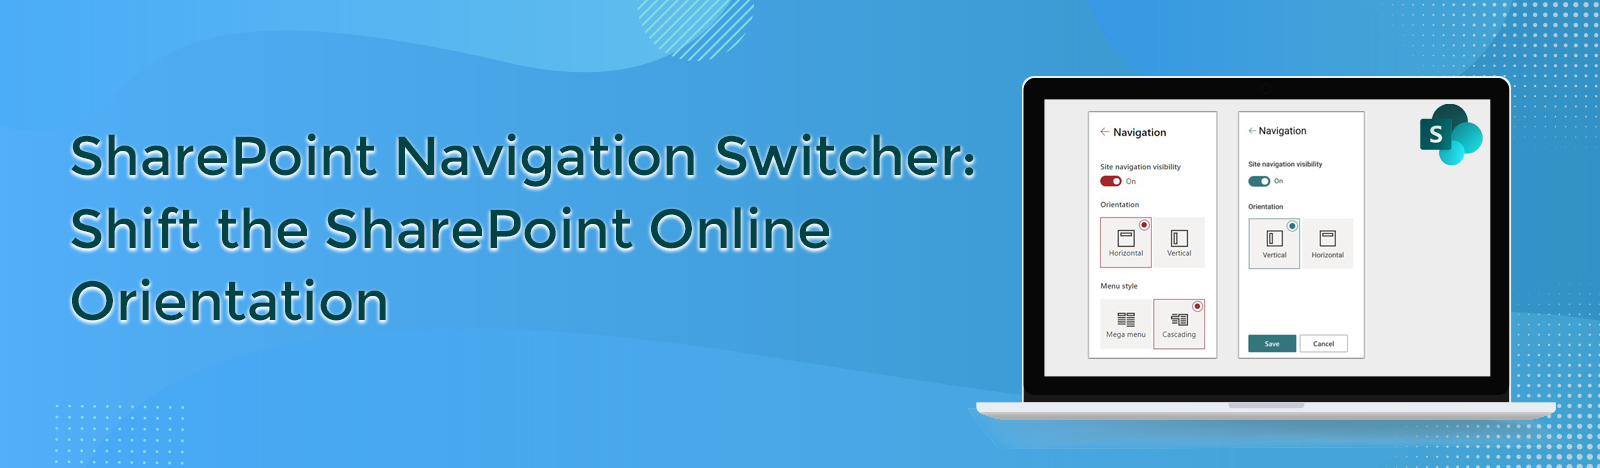 SharePoint Navigation Switcher: Shift the SharePoint Online Orientation